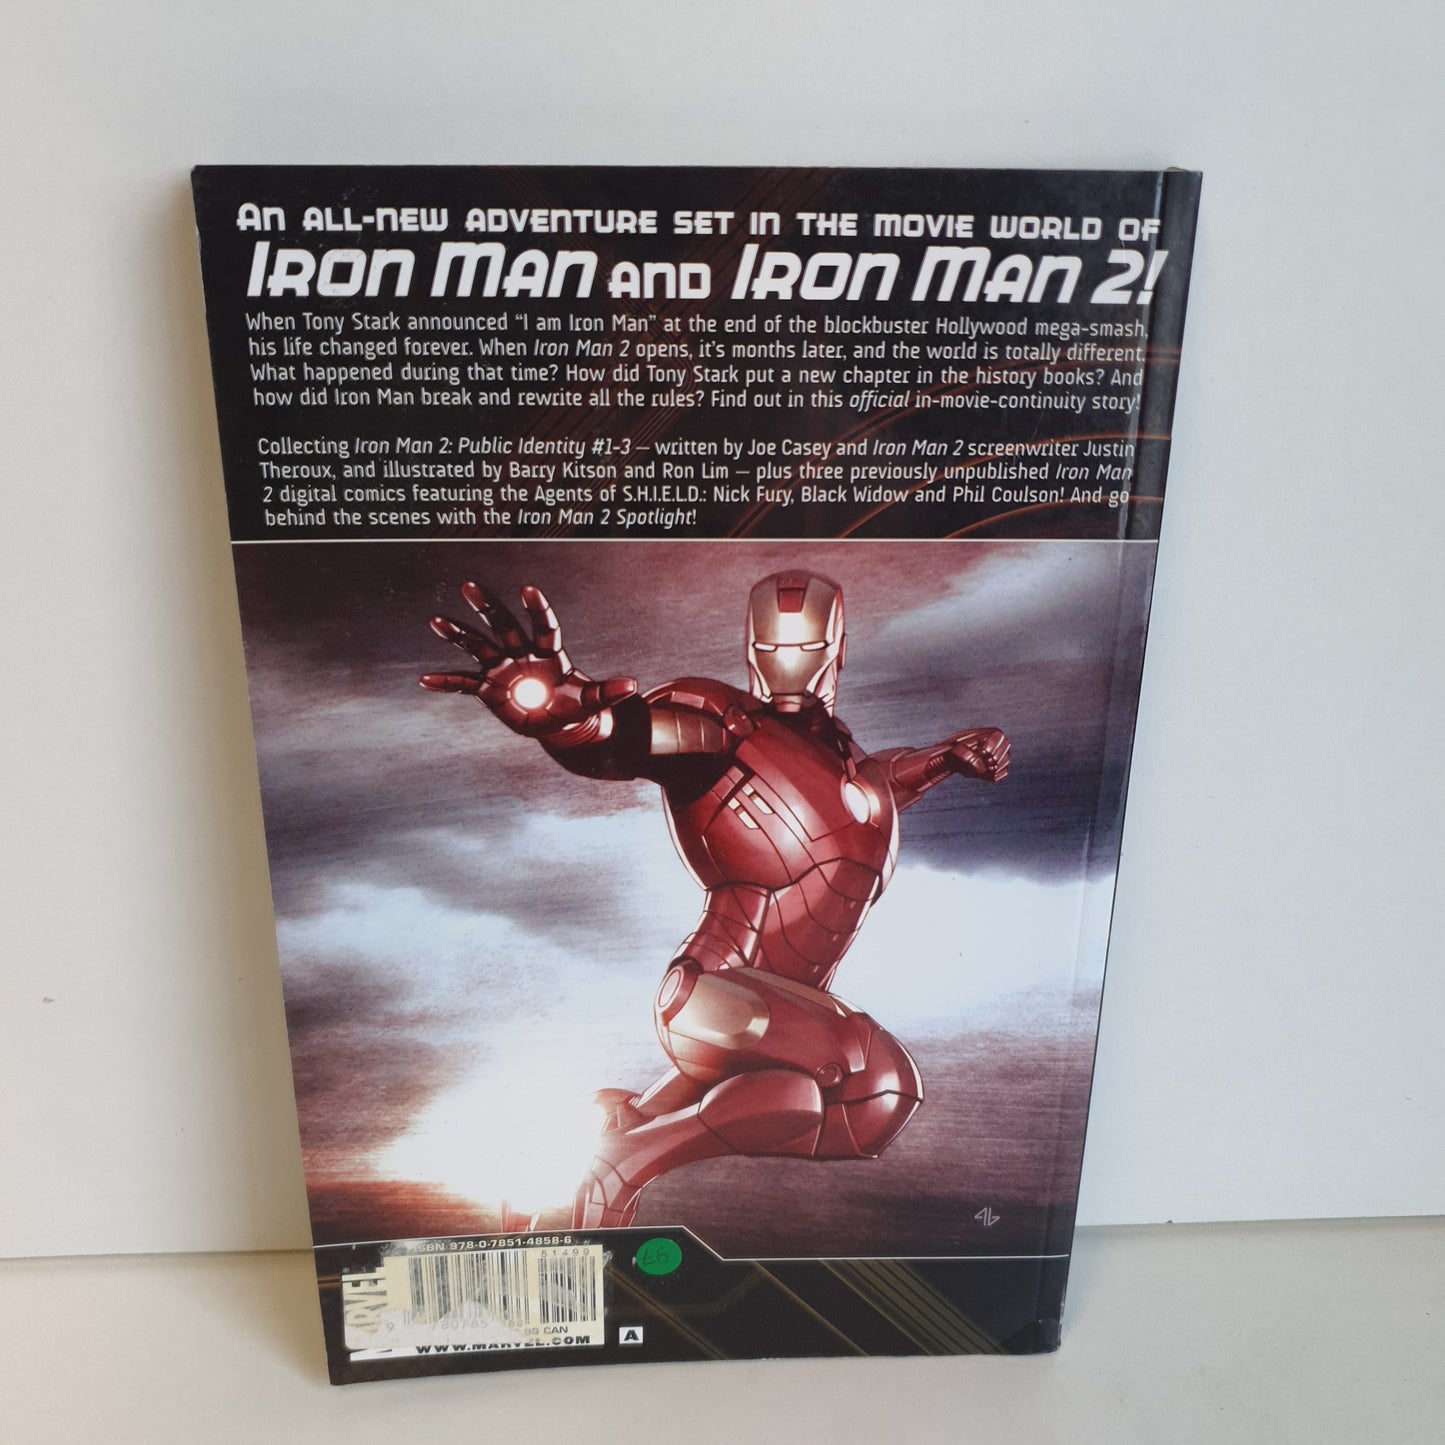 Iron Man 2 Public Identity by Joe Casey & Justin Theroux (2010)